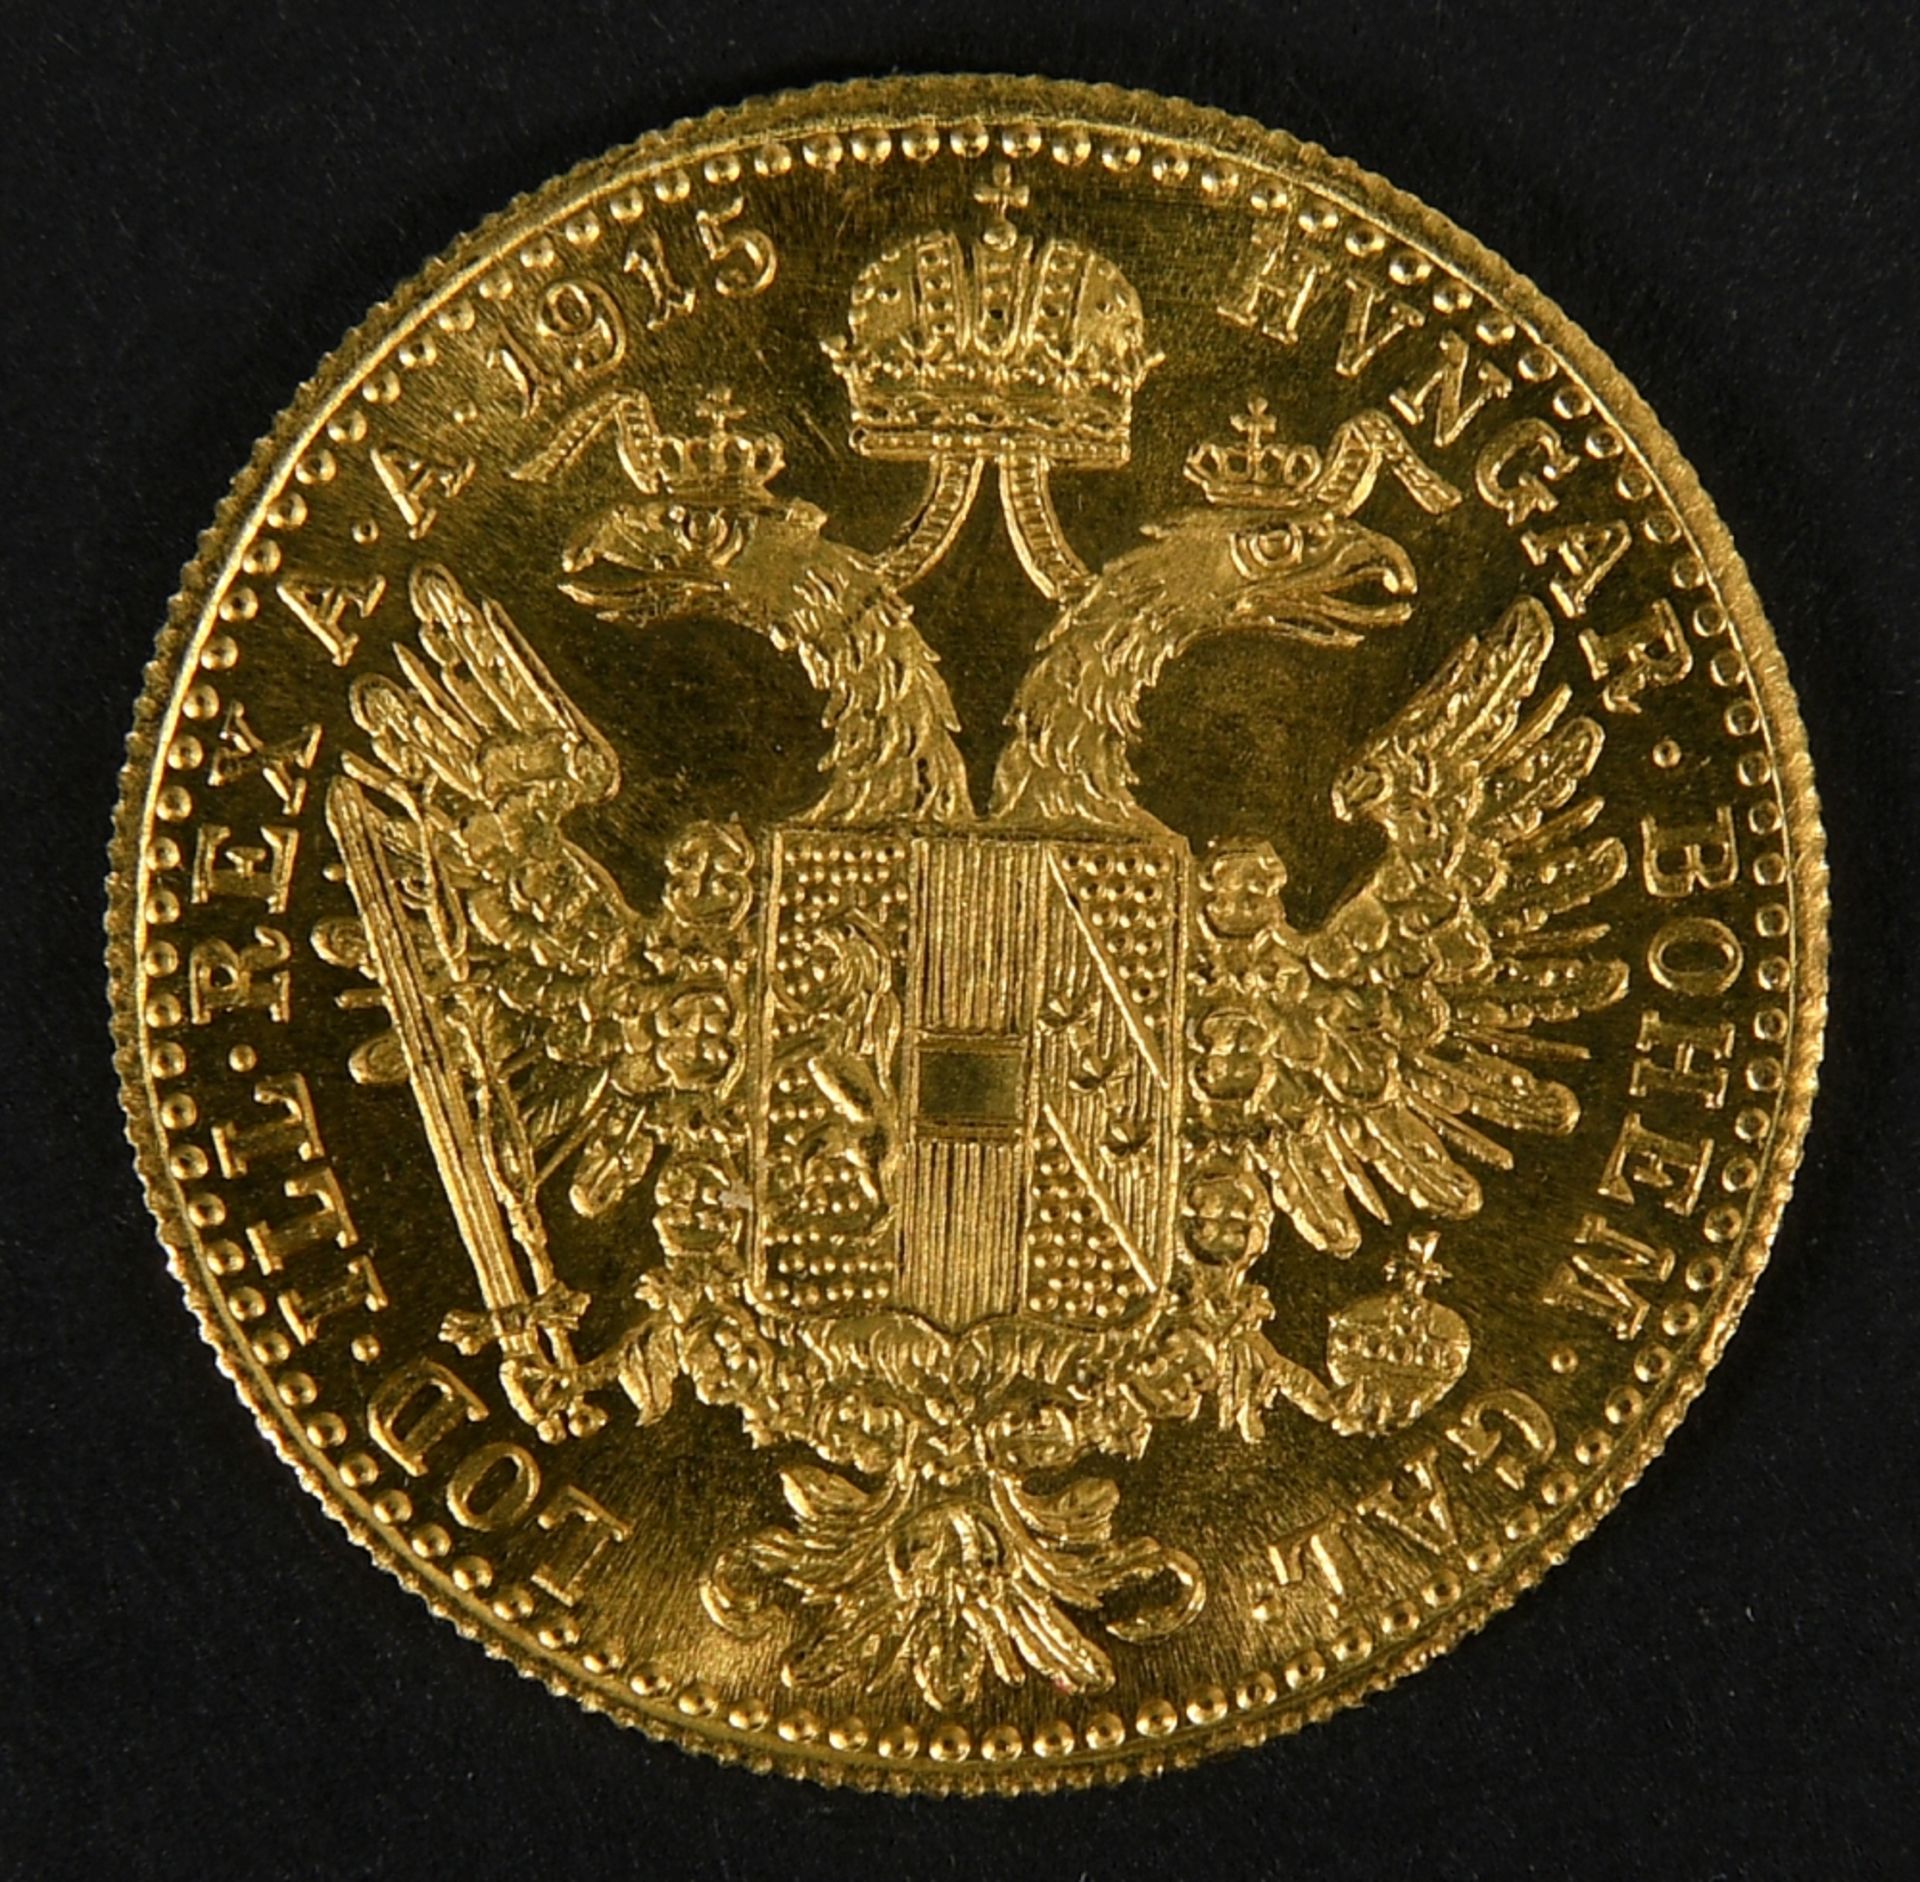 Münze - Goldmünze "1 Dukat 1915" - Image 3 of 3